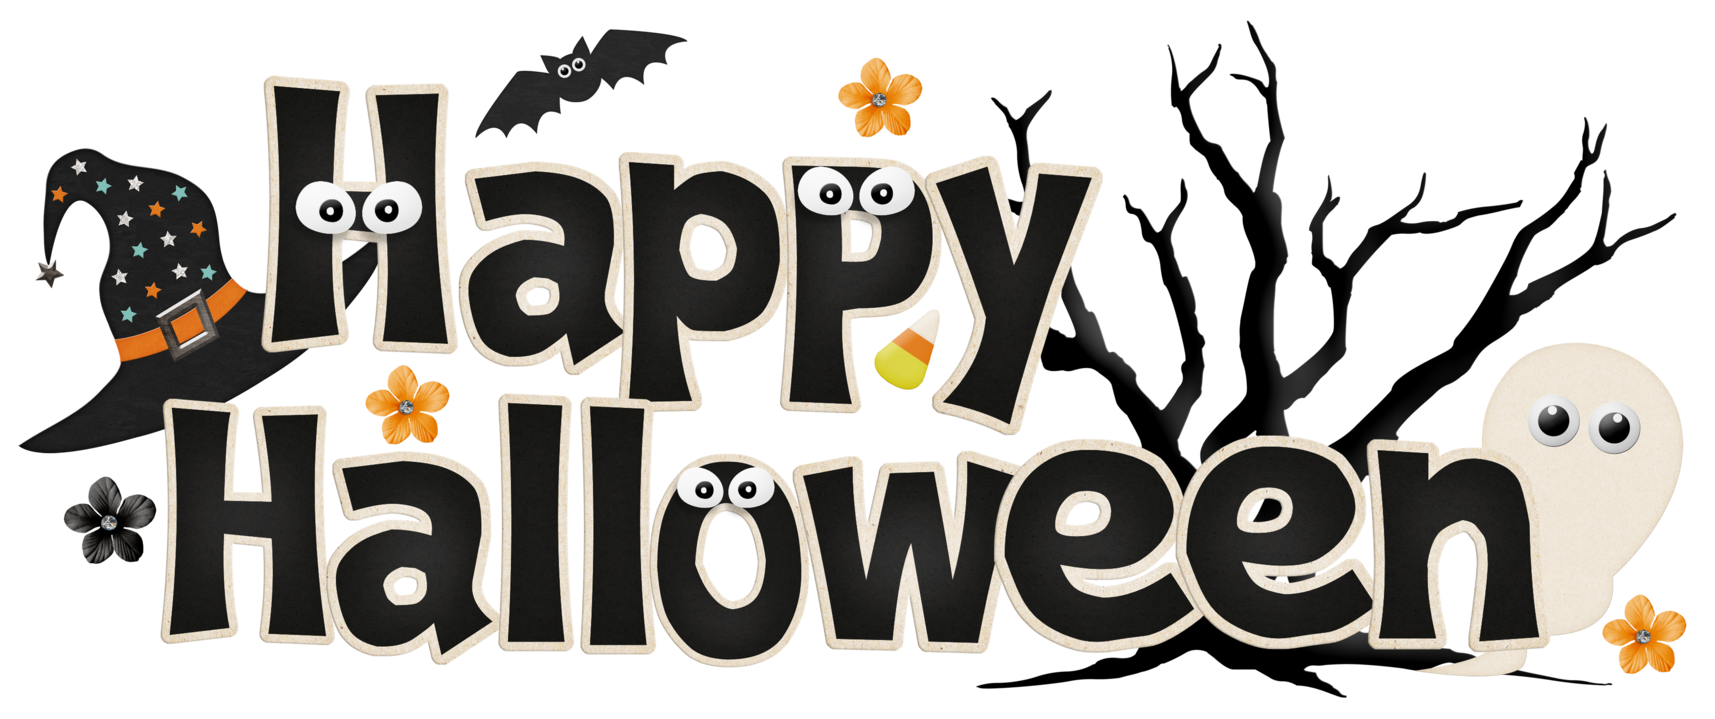 Free Transparent Happy Halloween, Download Free Transparent Happy Halloween png images, Free 